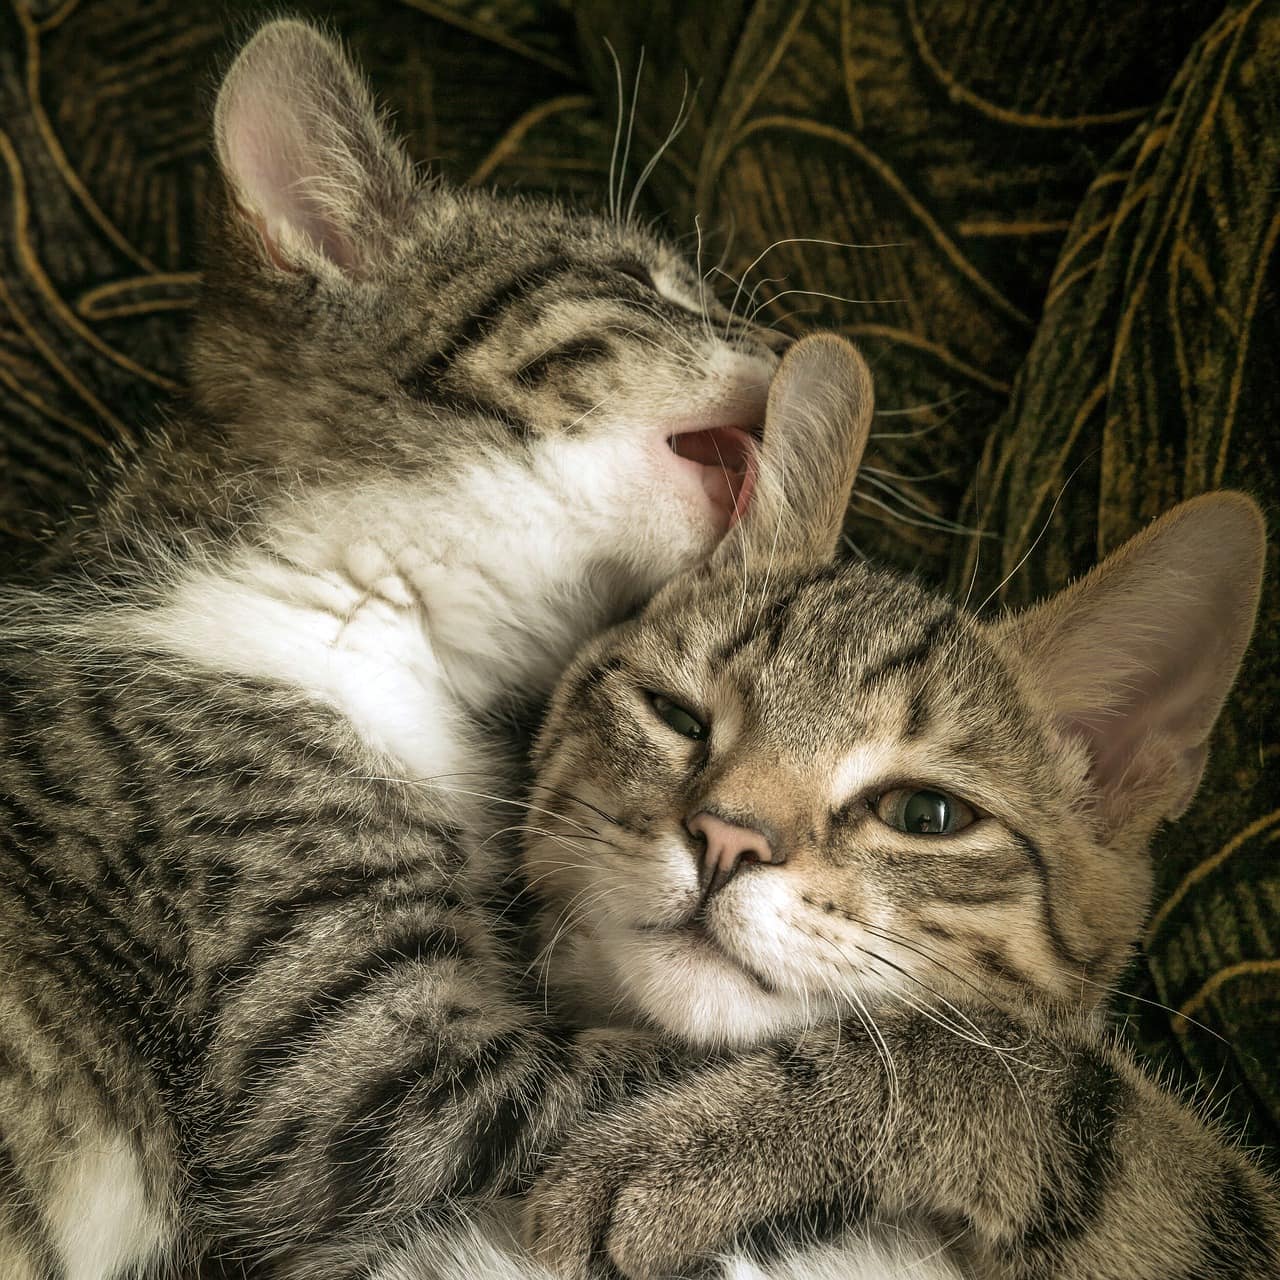 cat licking cat's ear